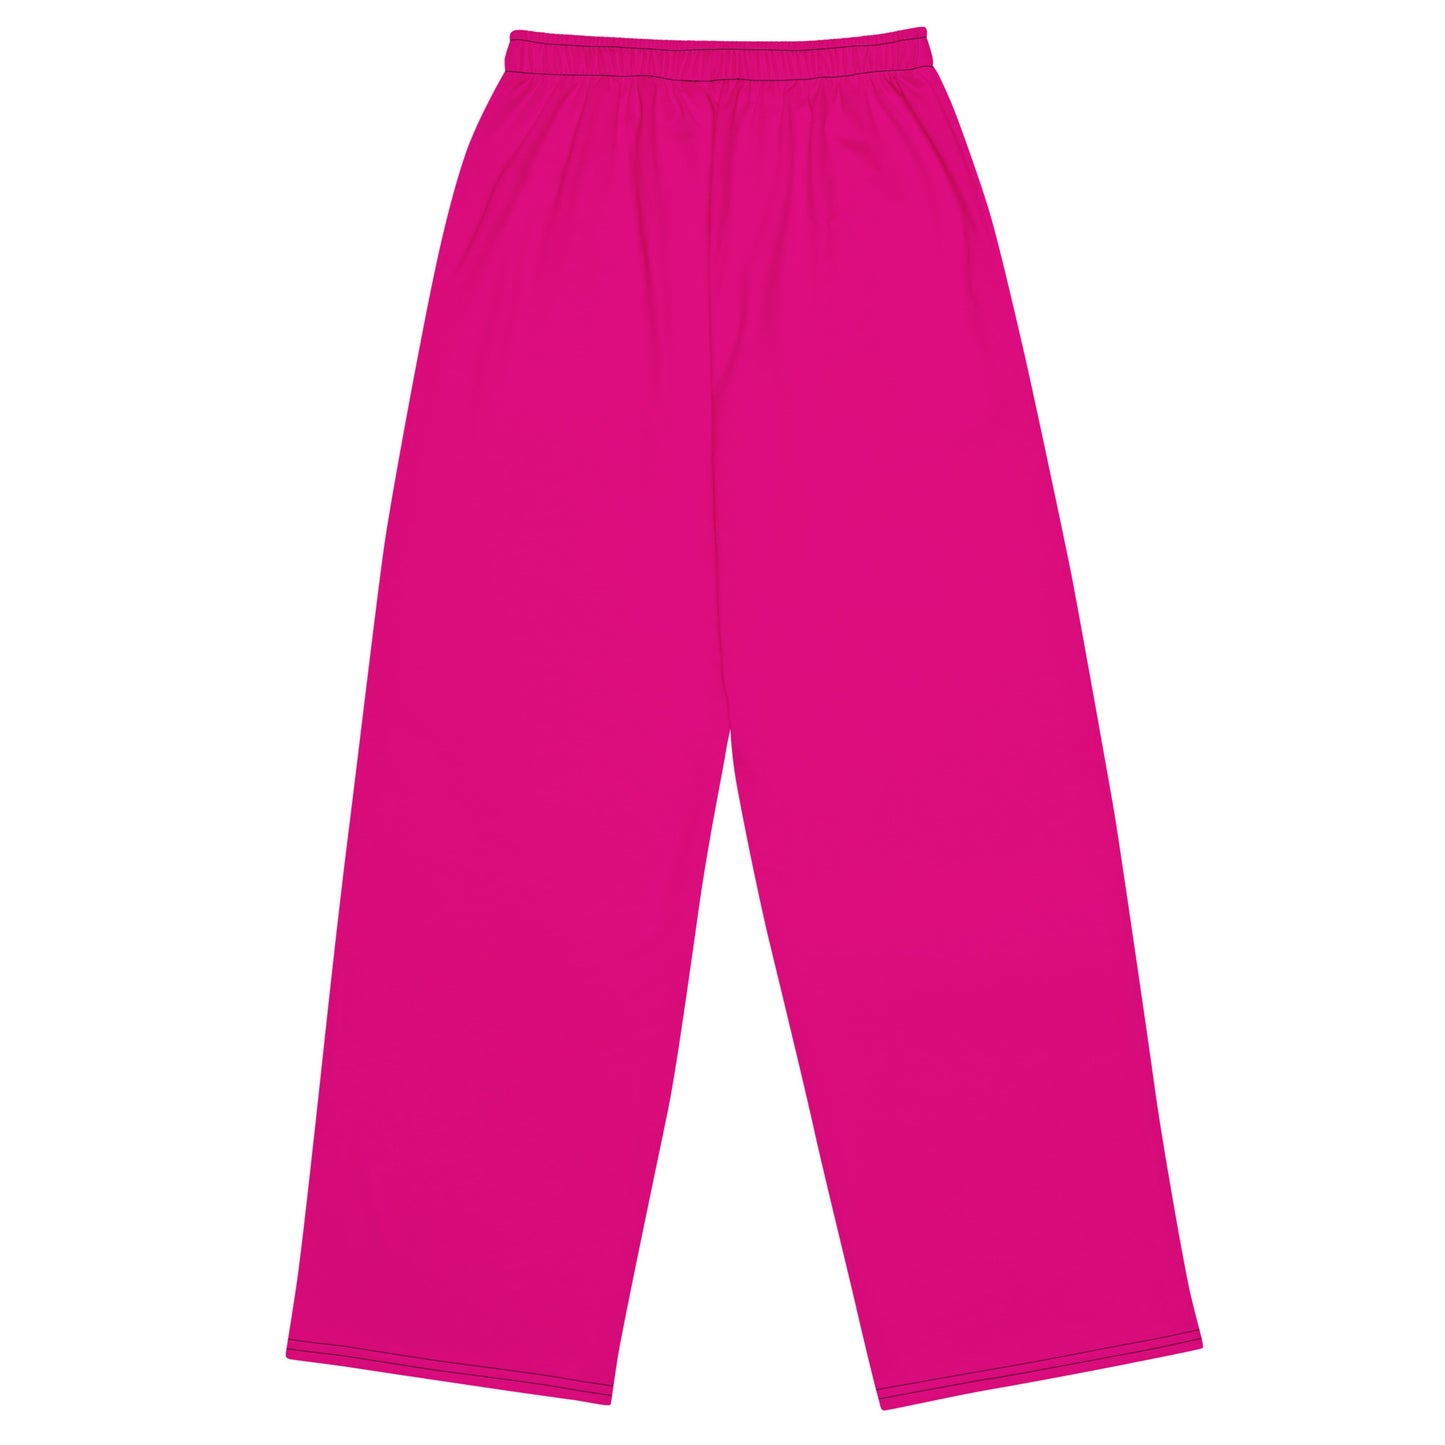 Pink unisex wide-leg pants